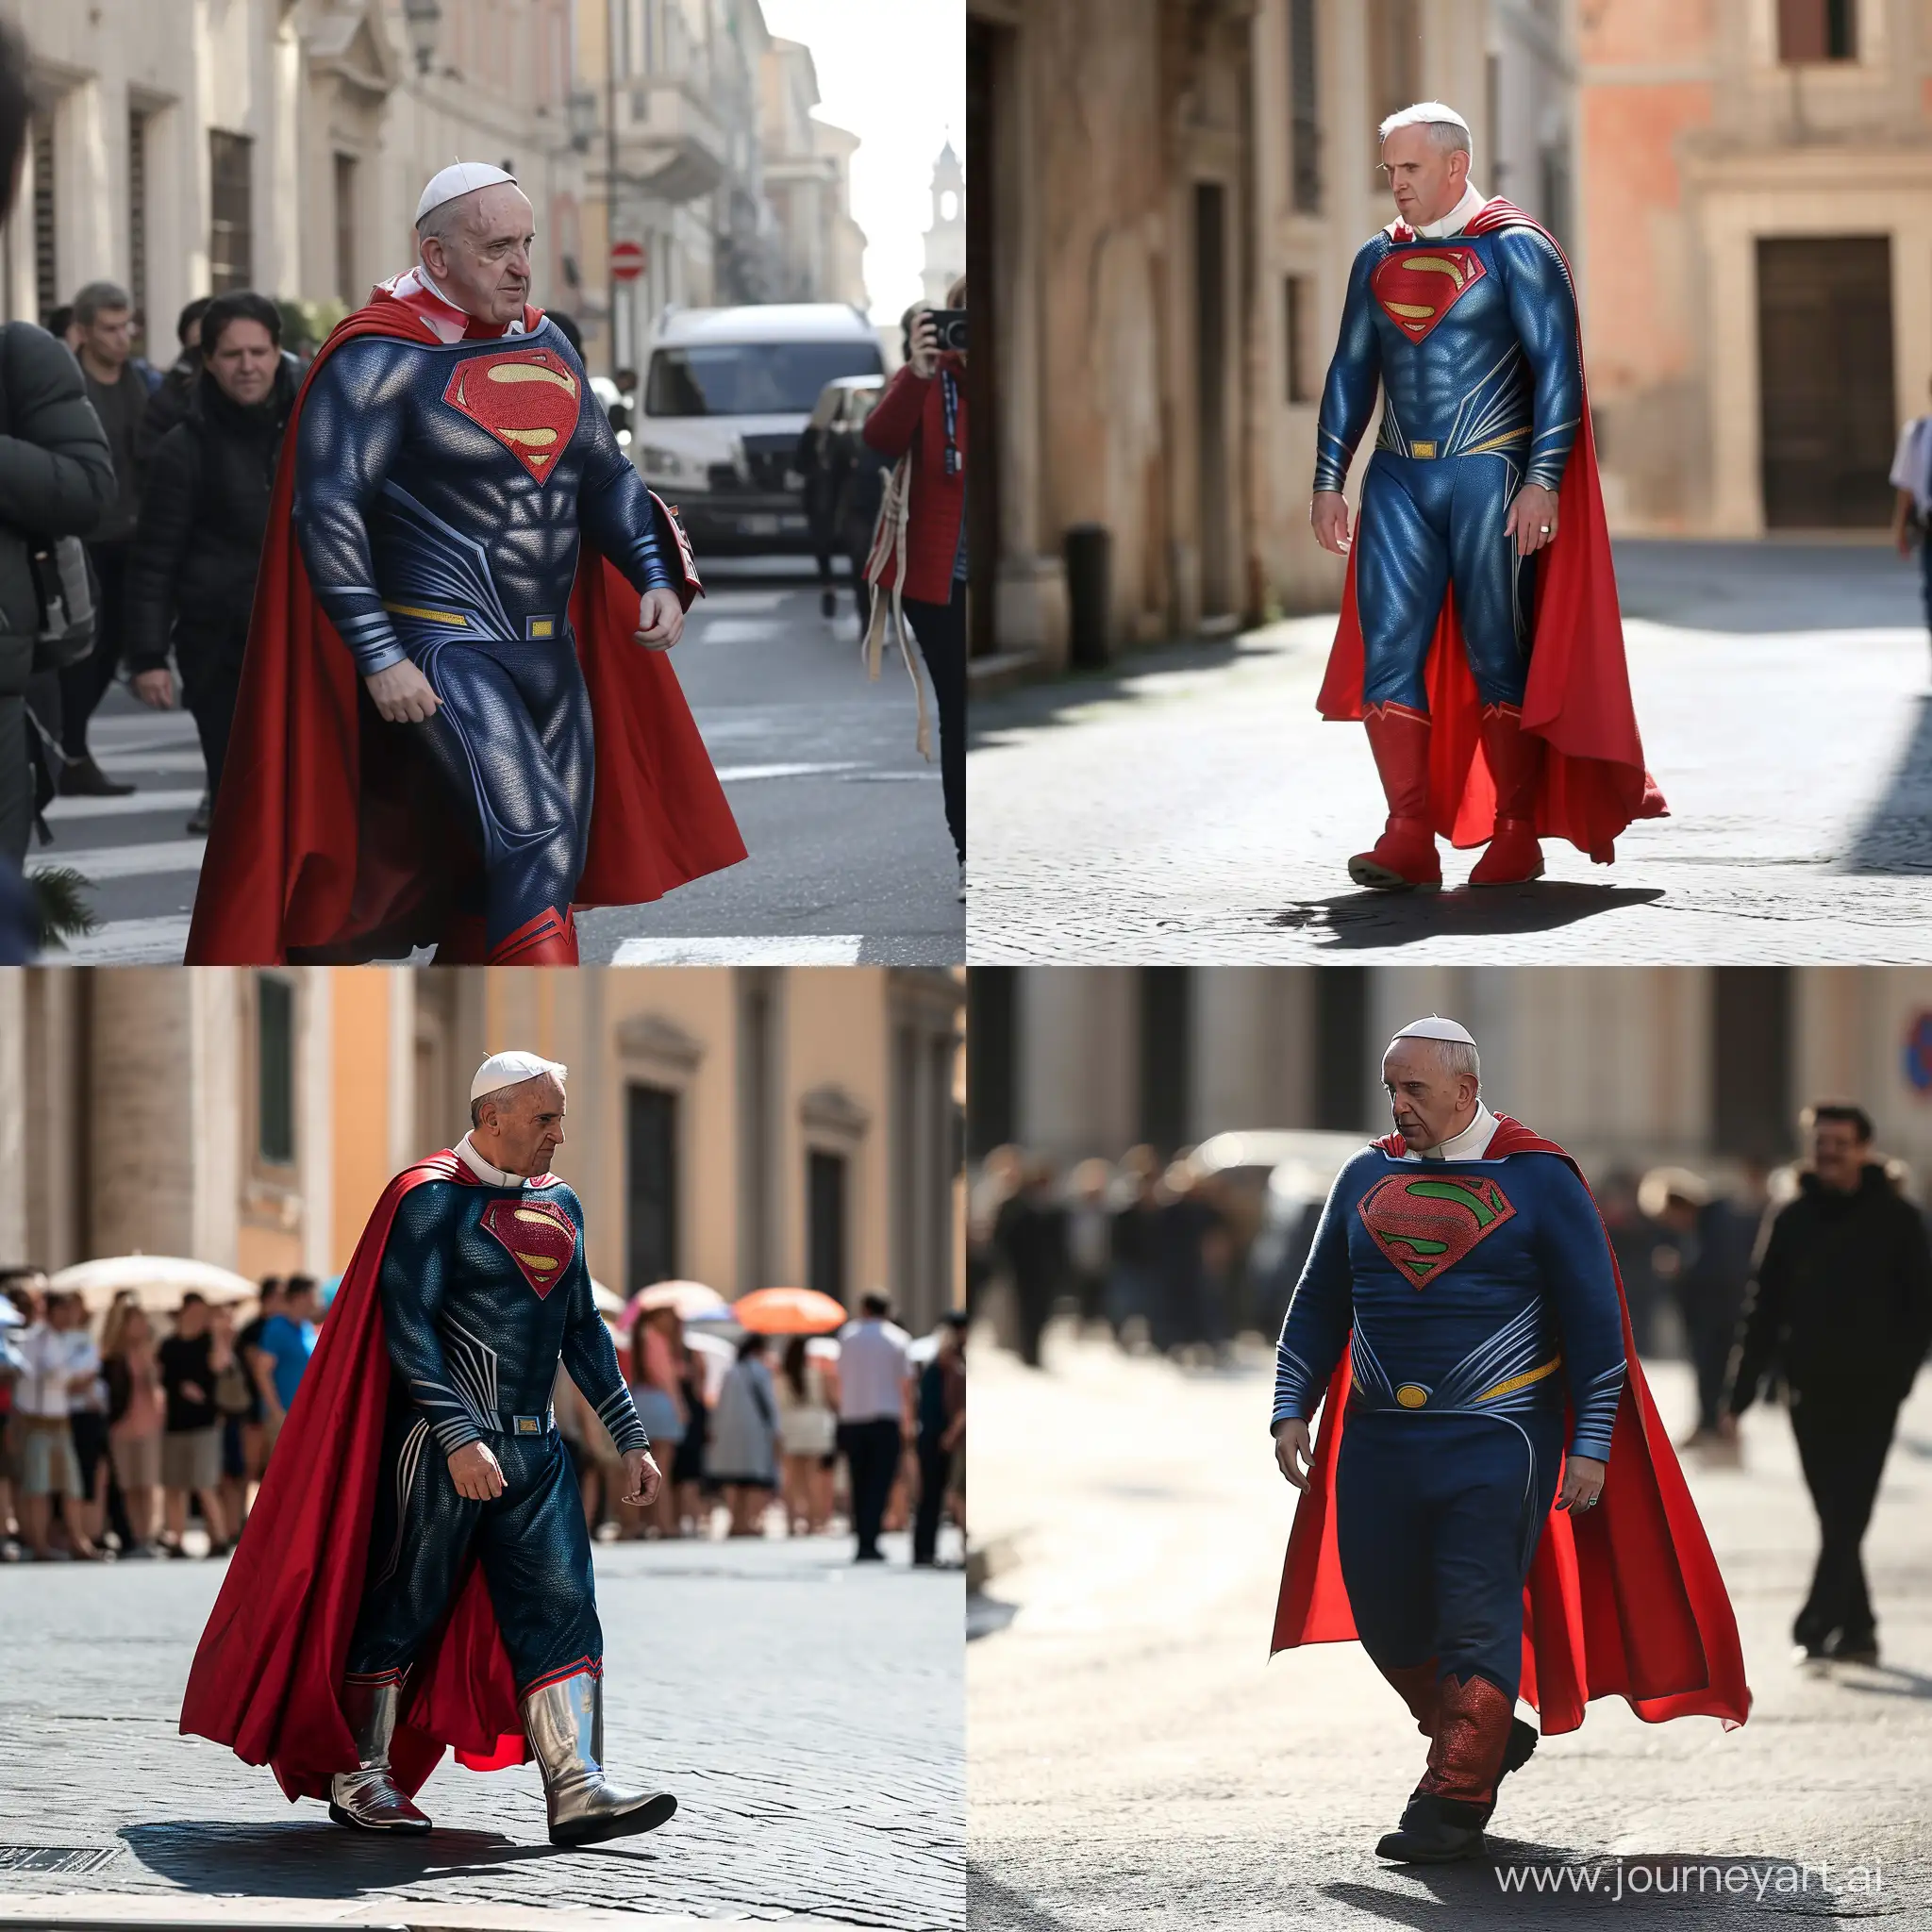 Pope-Strolling-in-Superman-Attire